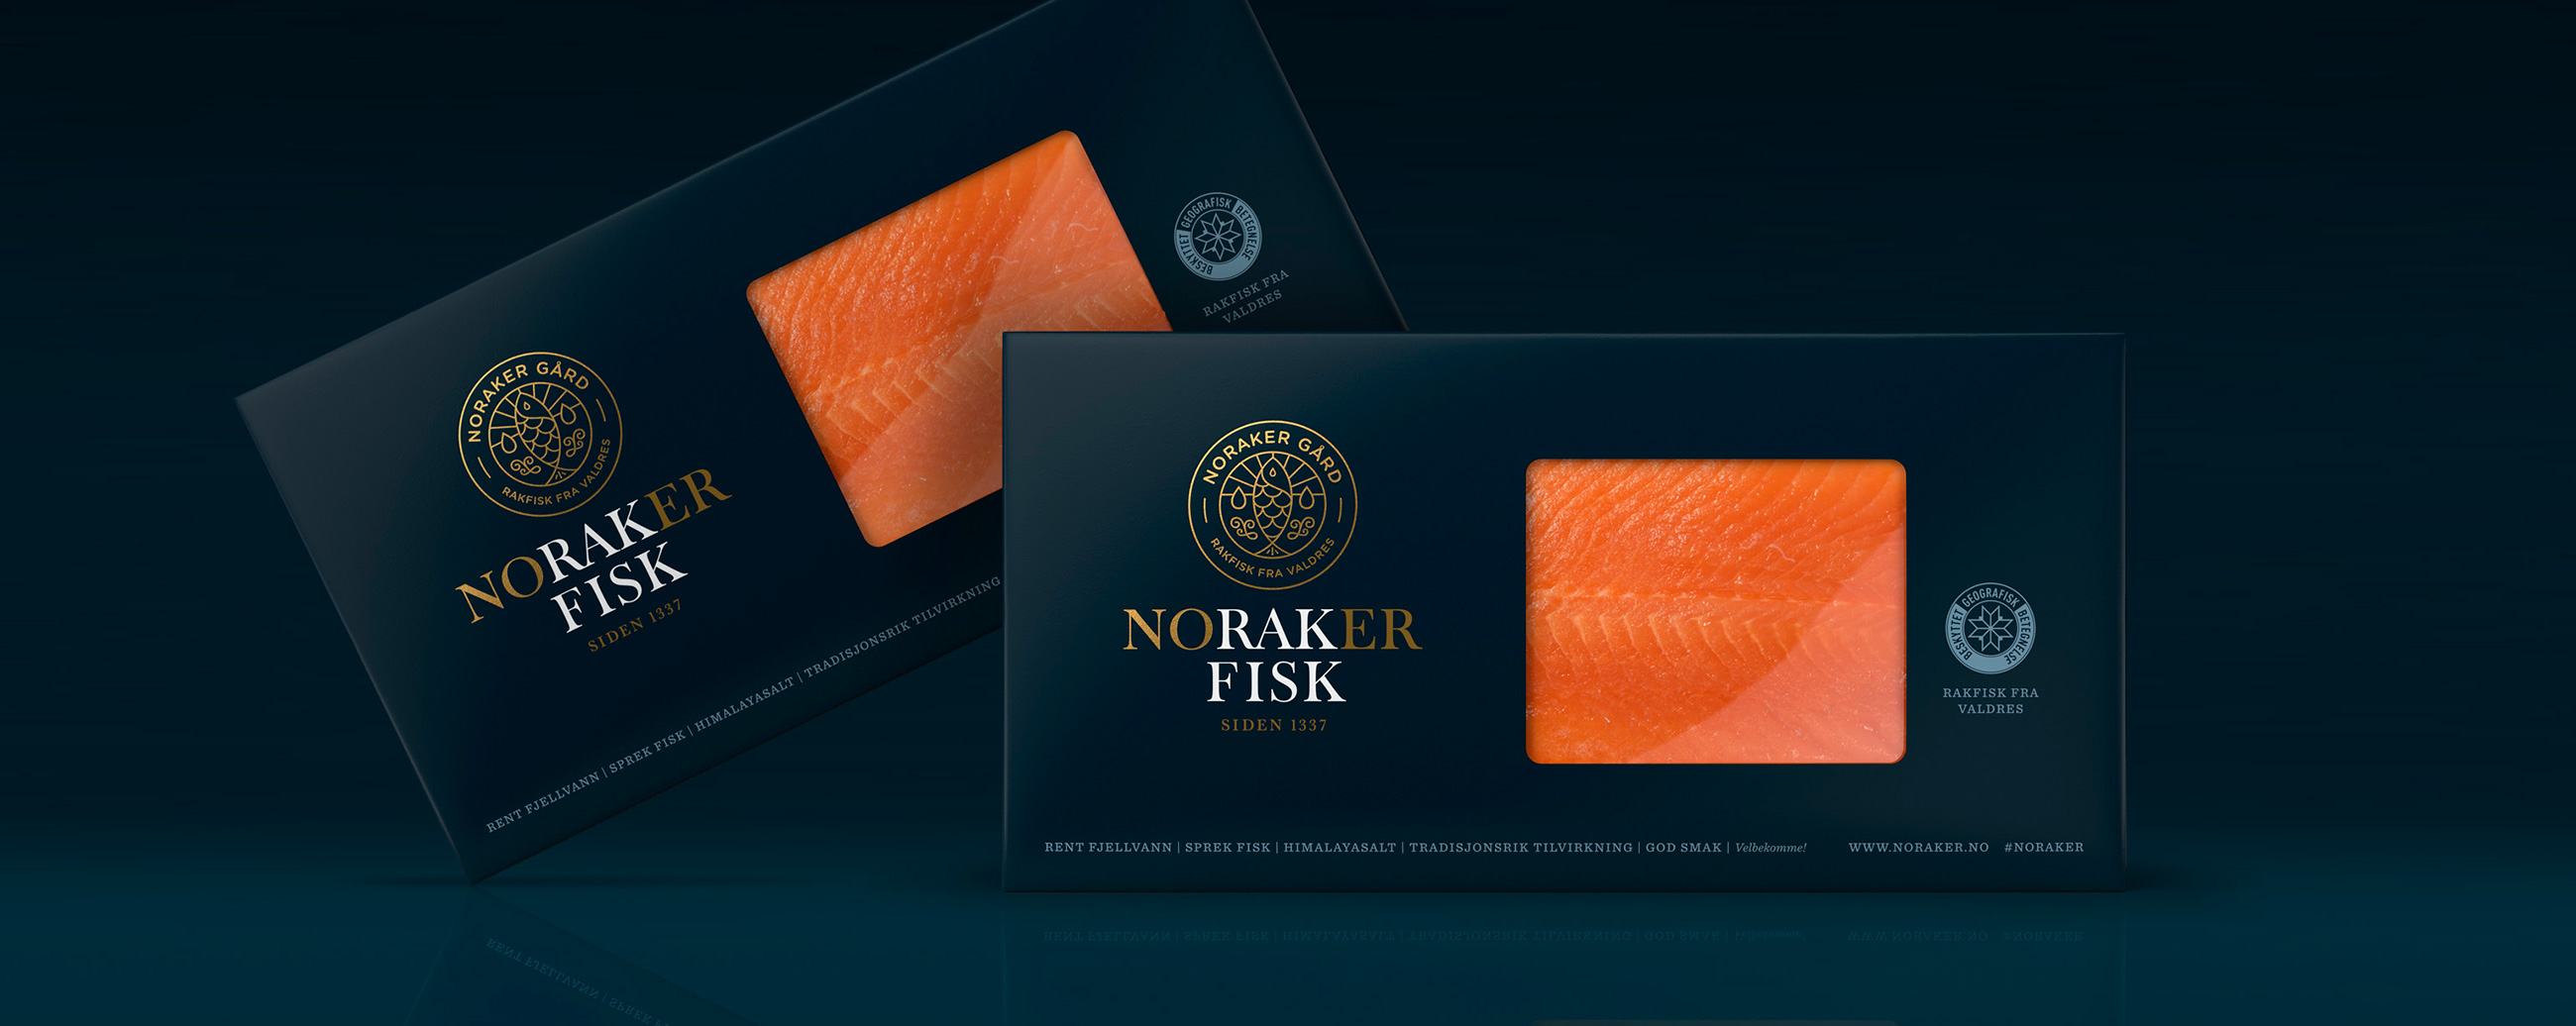 Noraker gård rakfisk fish. Emballasje packaging design.